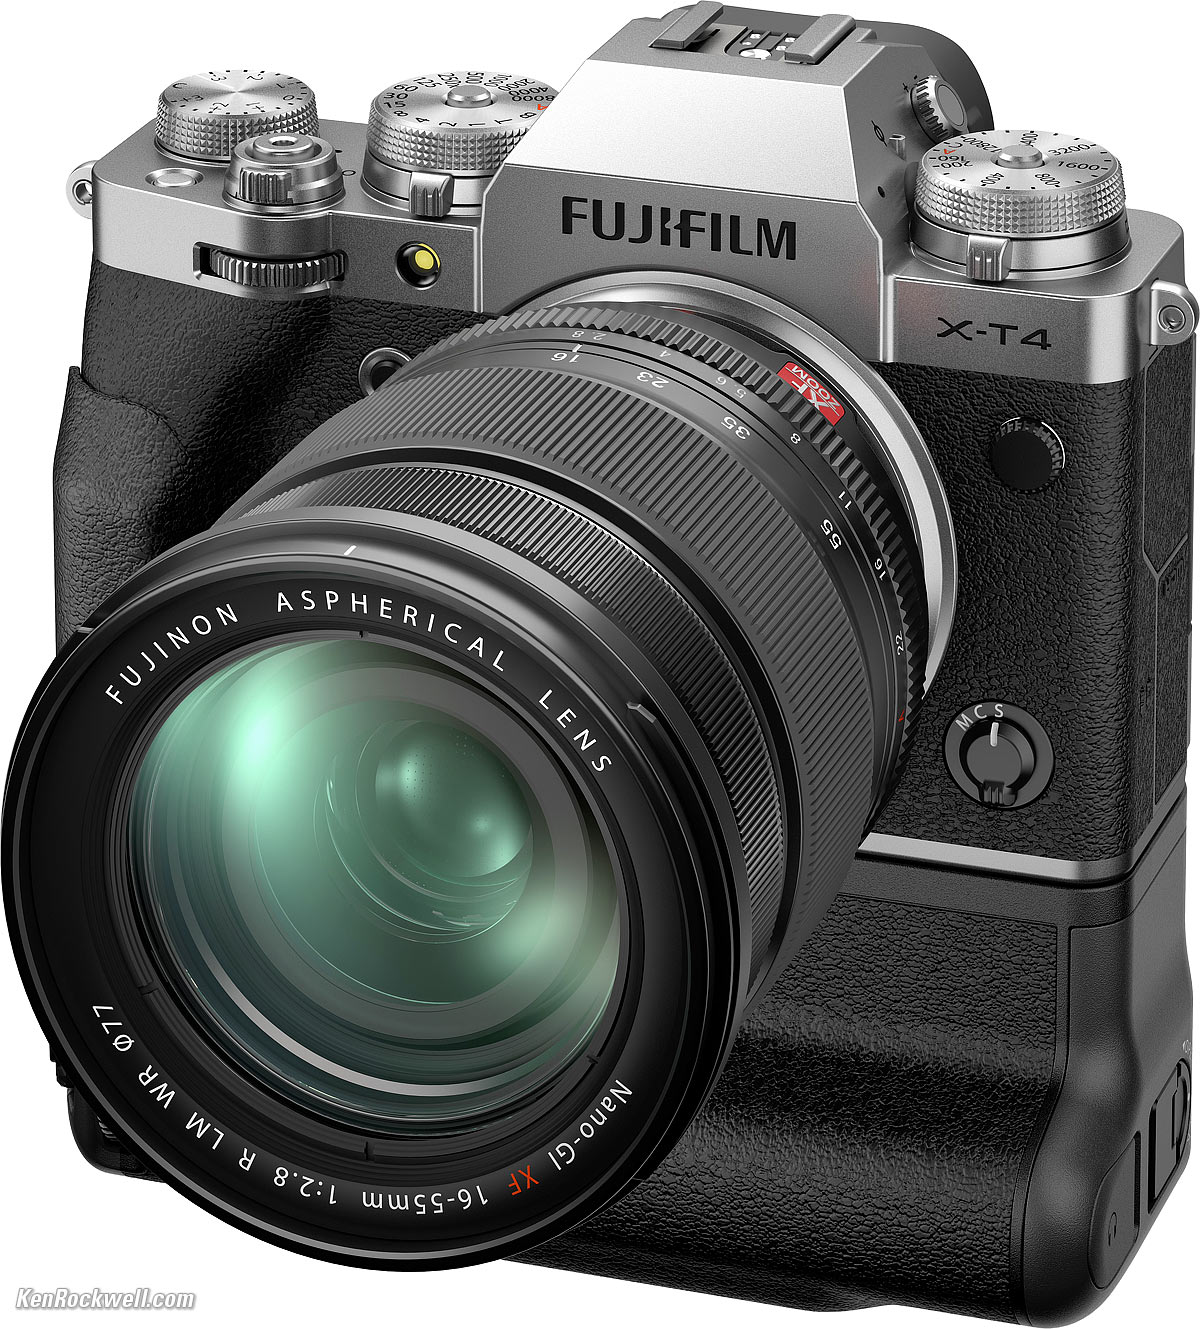 Fujifilm X-T4 Camera Review